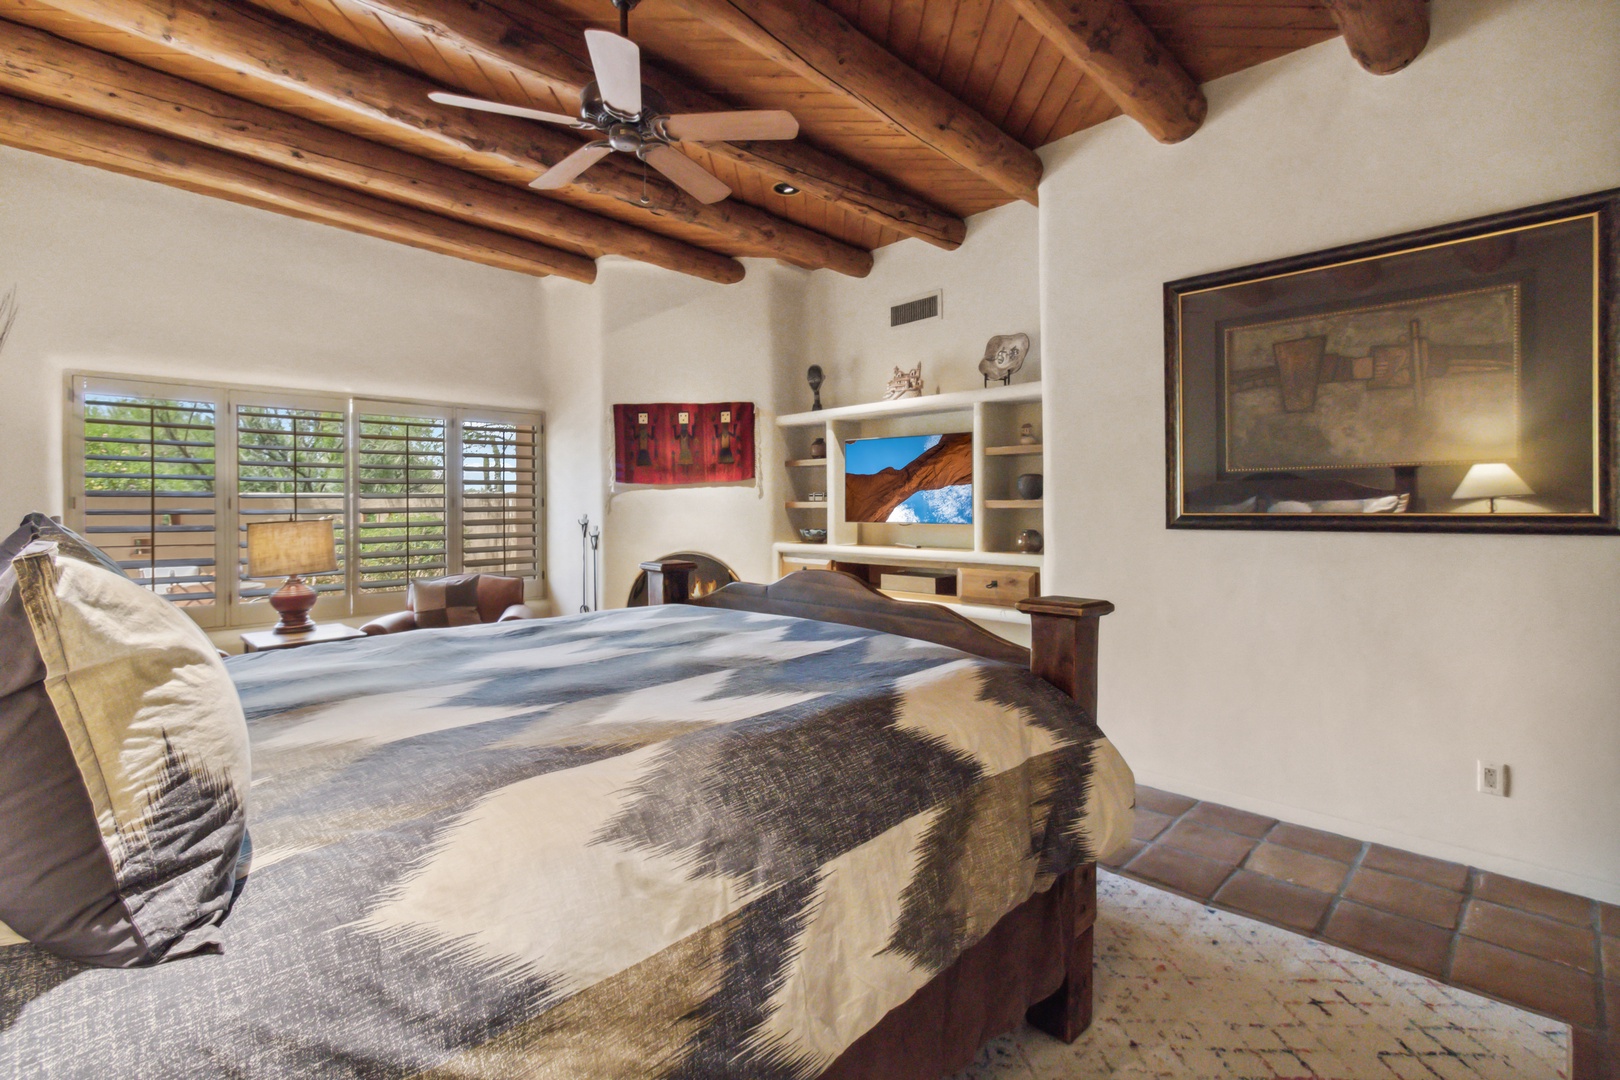 Scottsdale Vacation Rentals, Boulders Hideaway Villa - Primary bedroom includes a large walk - in closet